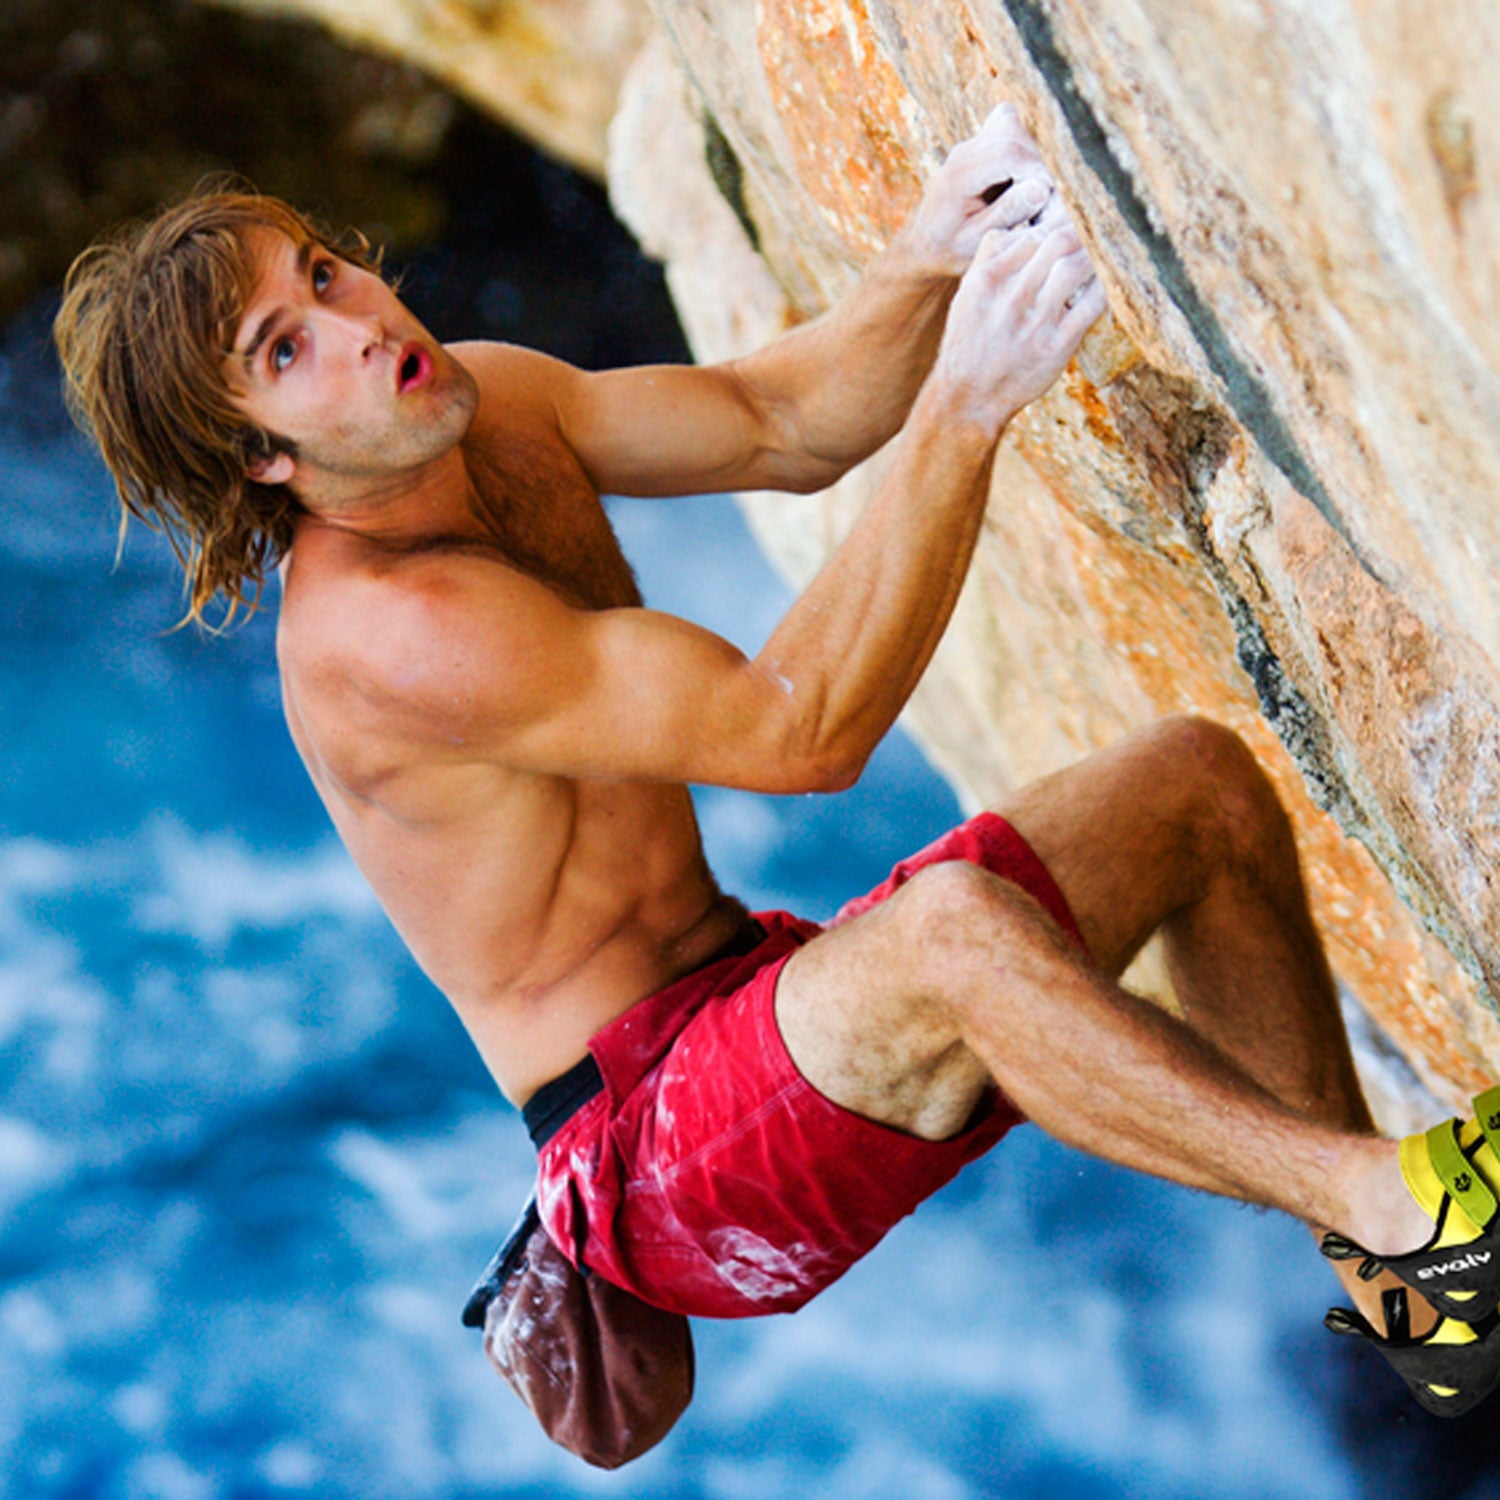 Get That Life: How I Became a Professional Rock Climber